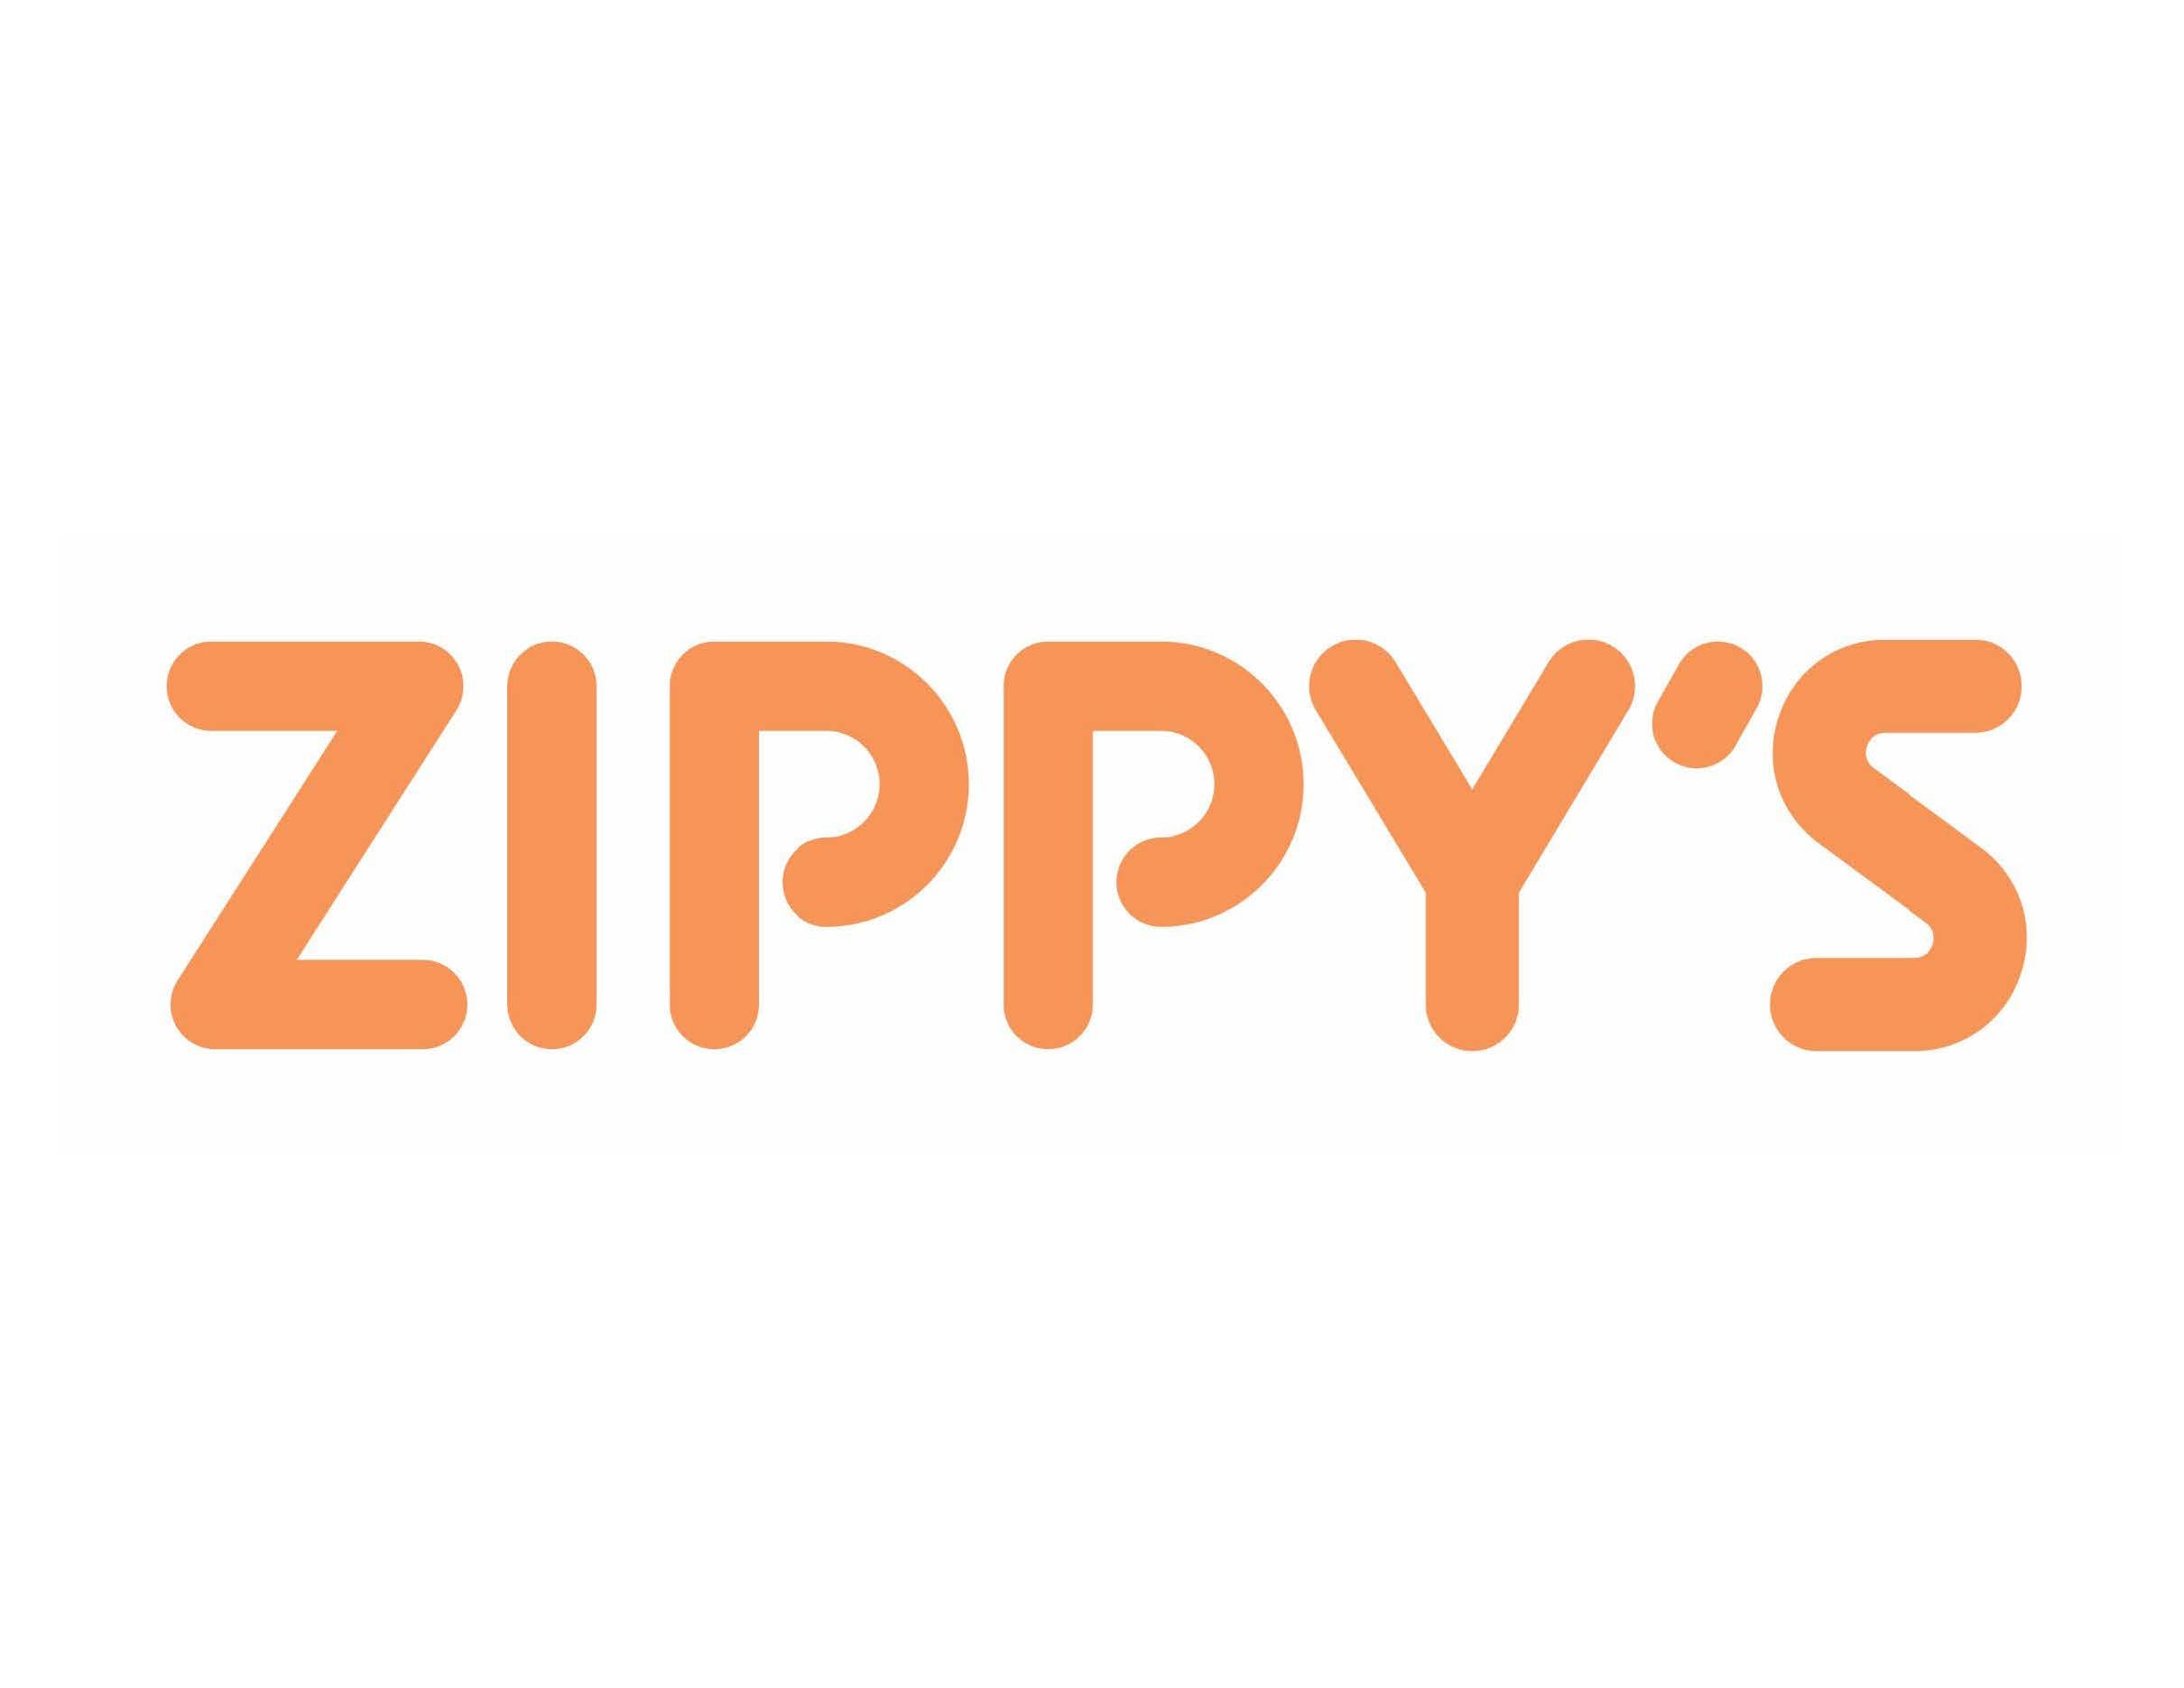 Zippys.jpg